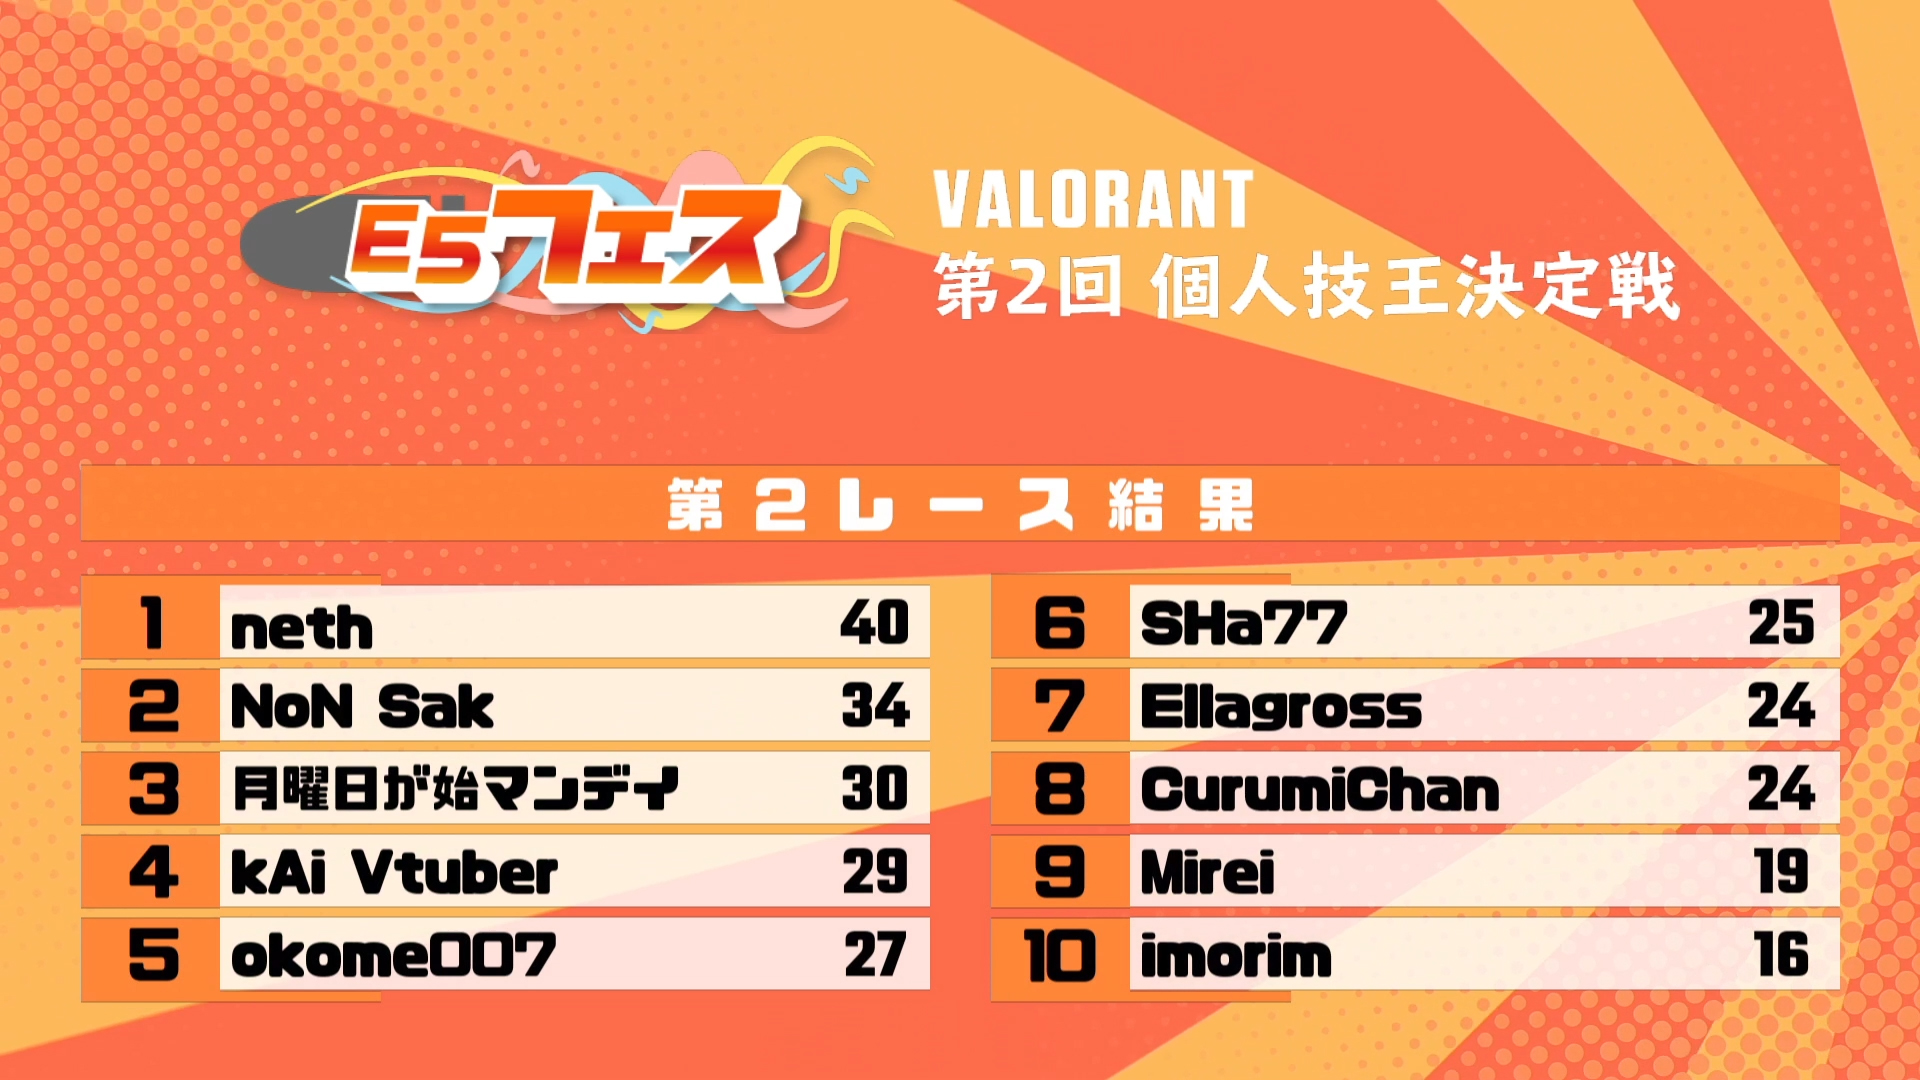 E5フェス VALORANT 第2回 個人技王決定戦 powered by GALLERIA 